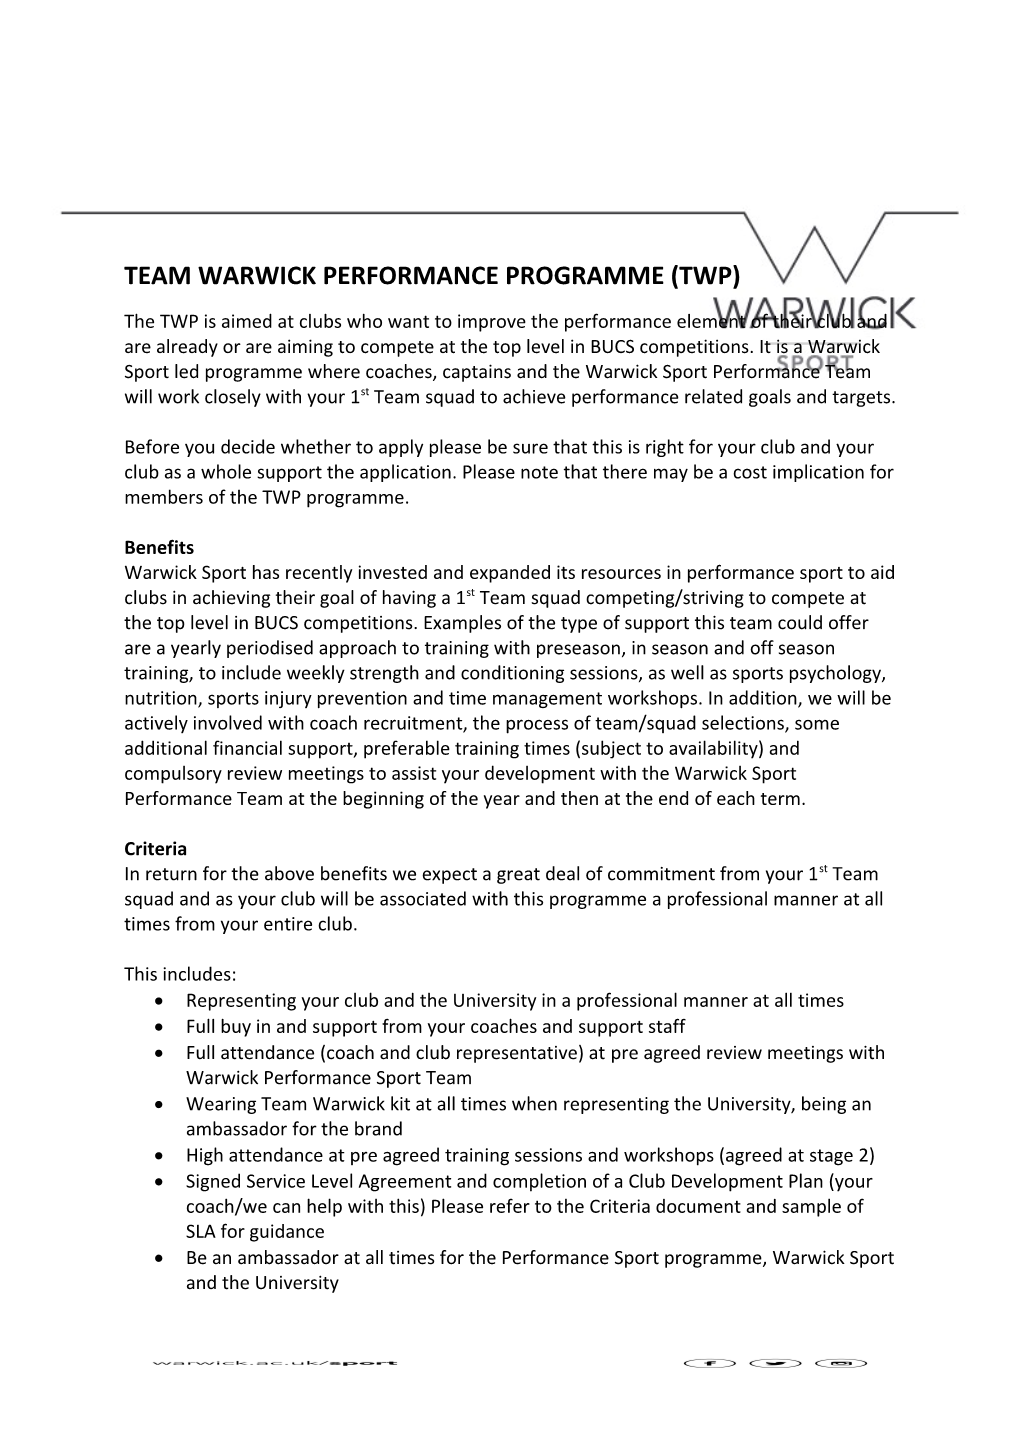 Team Warwick Performance Programme (Twp)